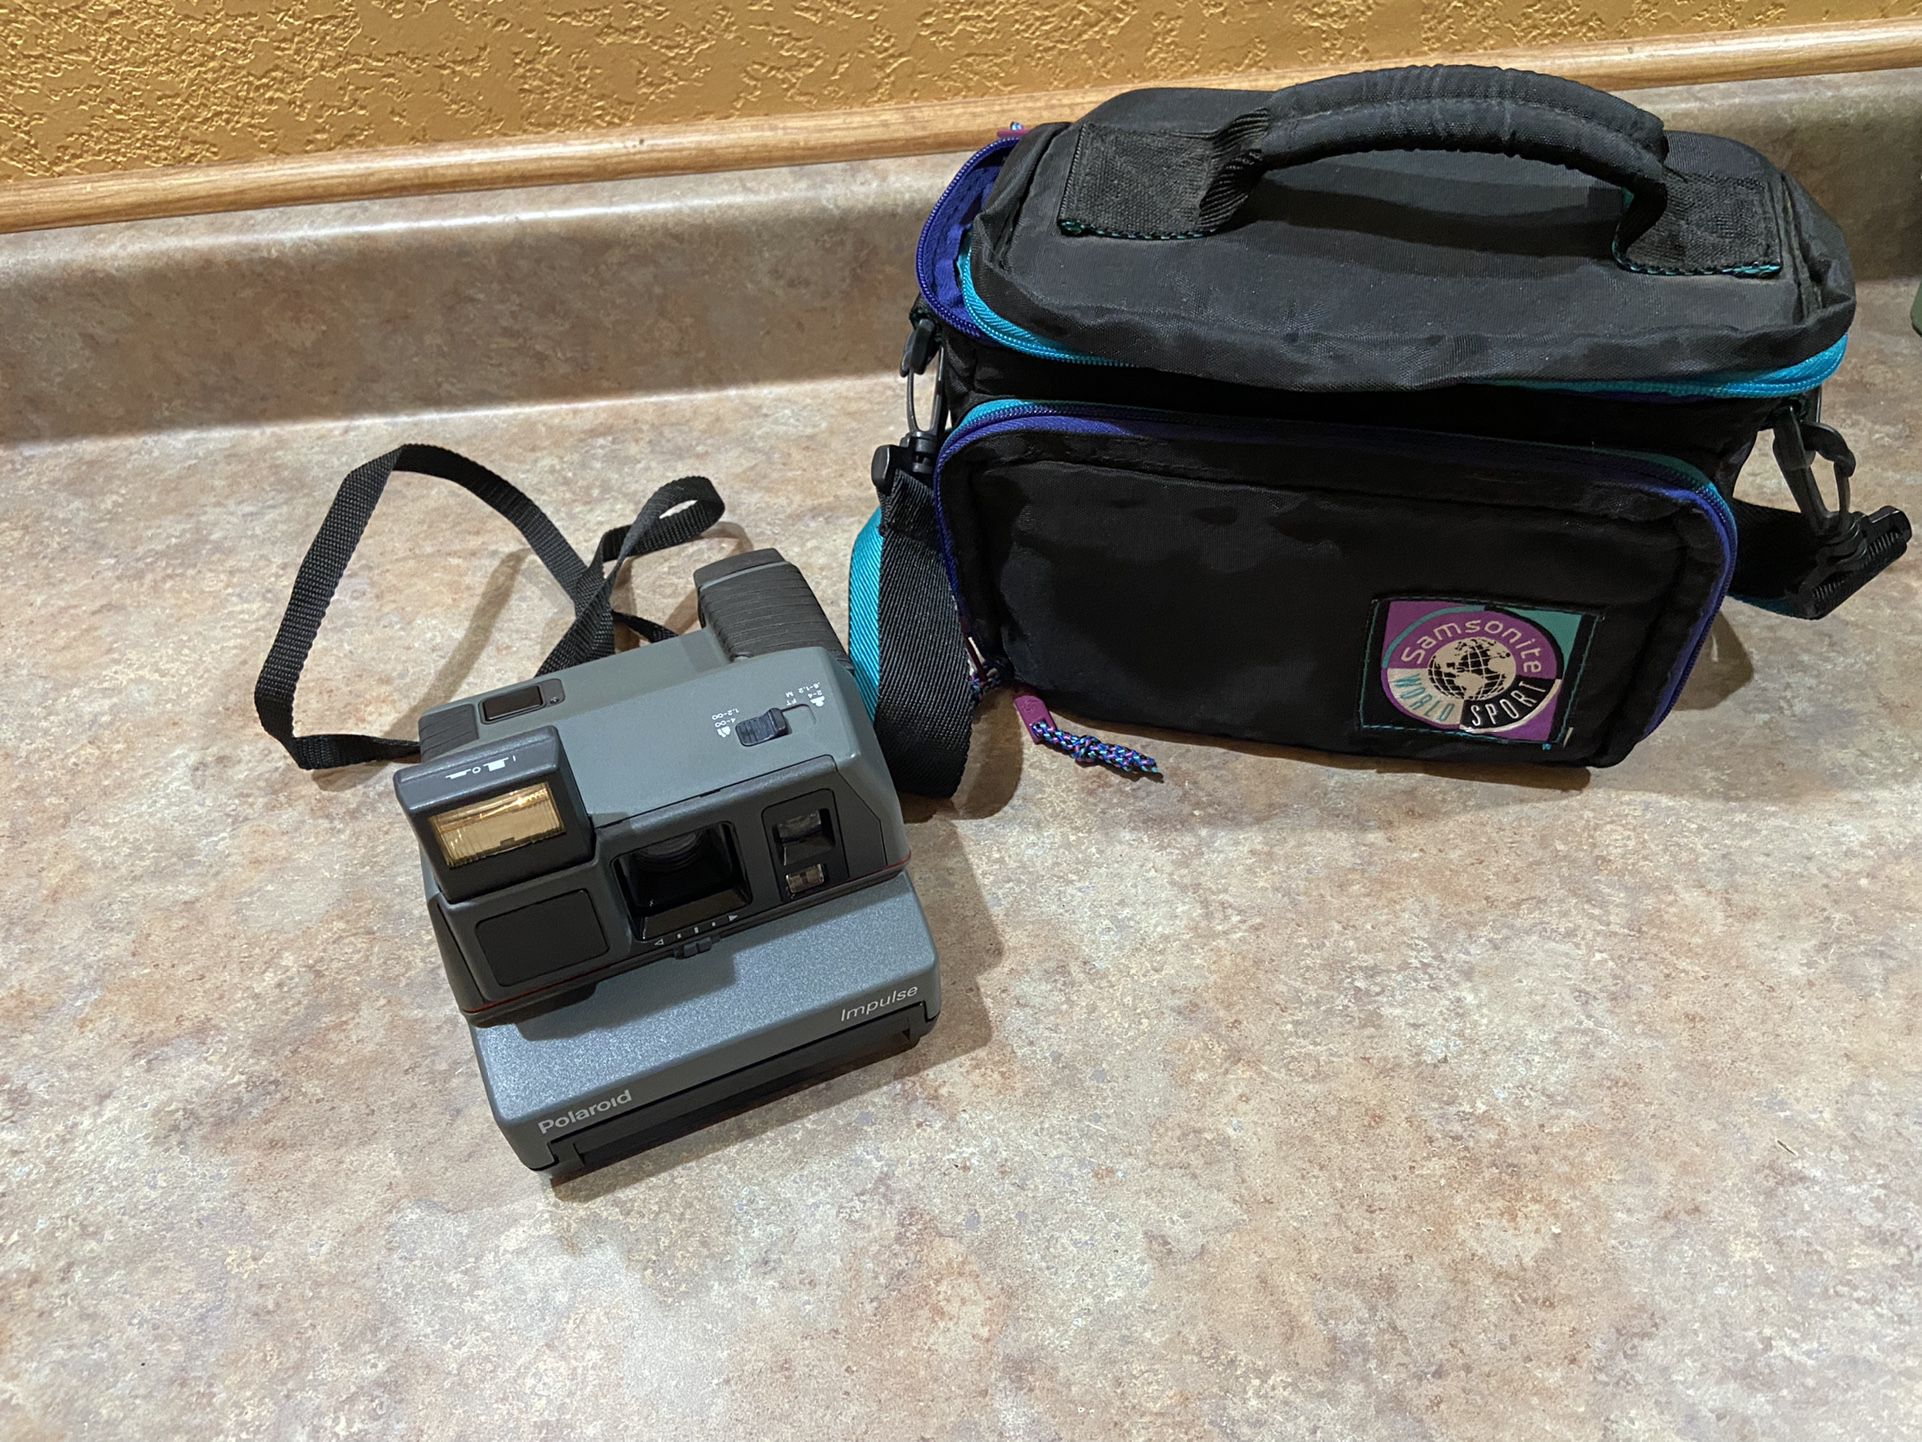 Retro Polaroid Impulse Camera 